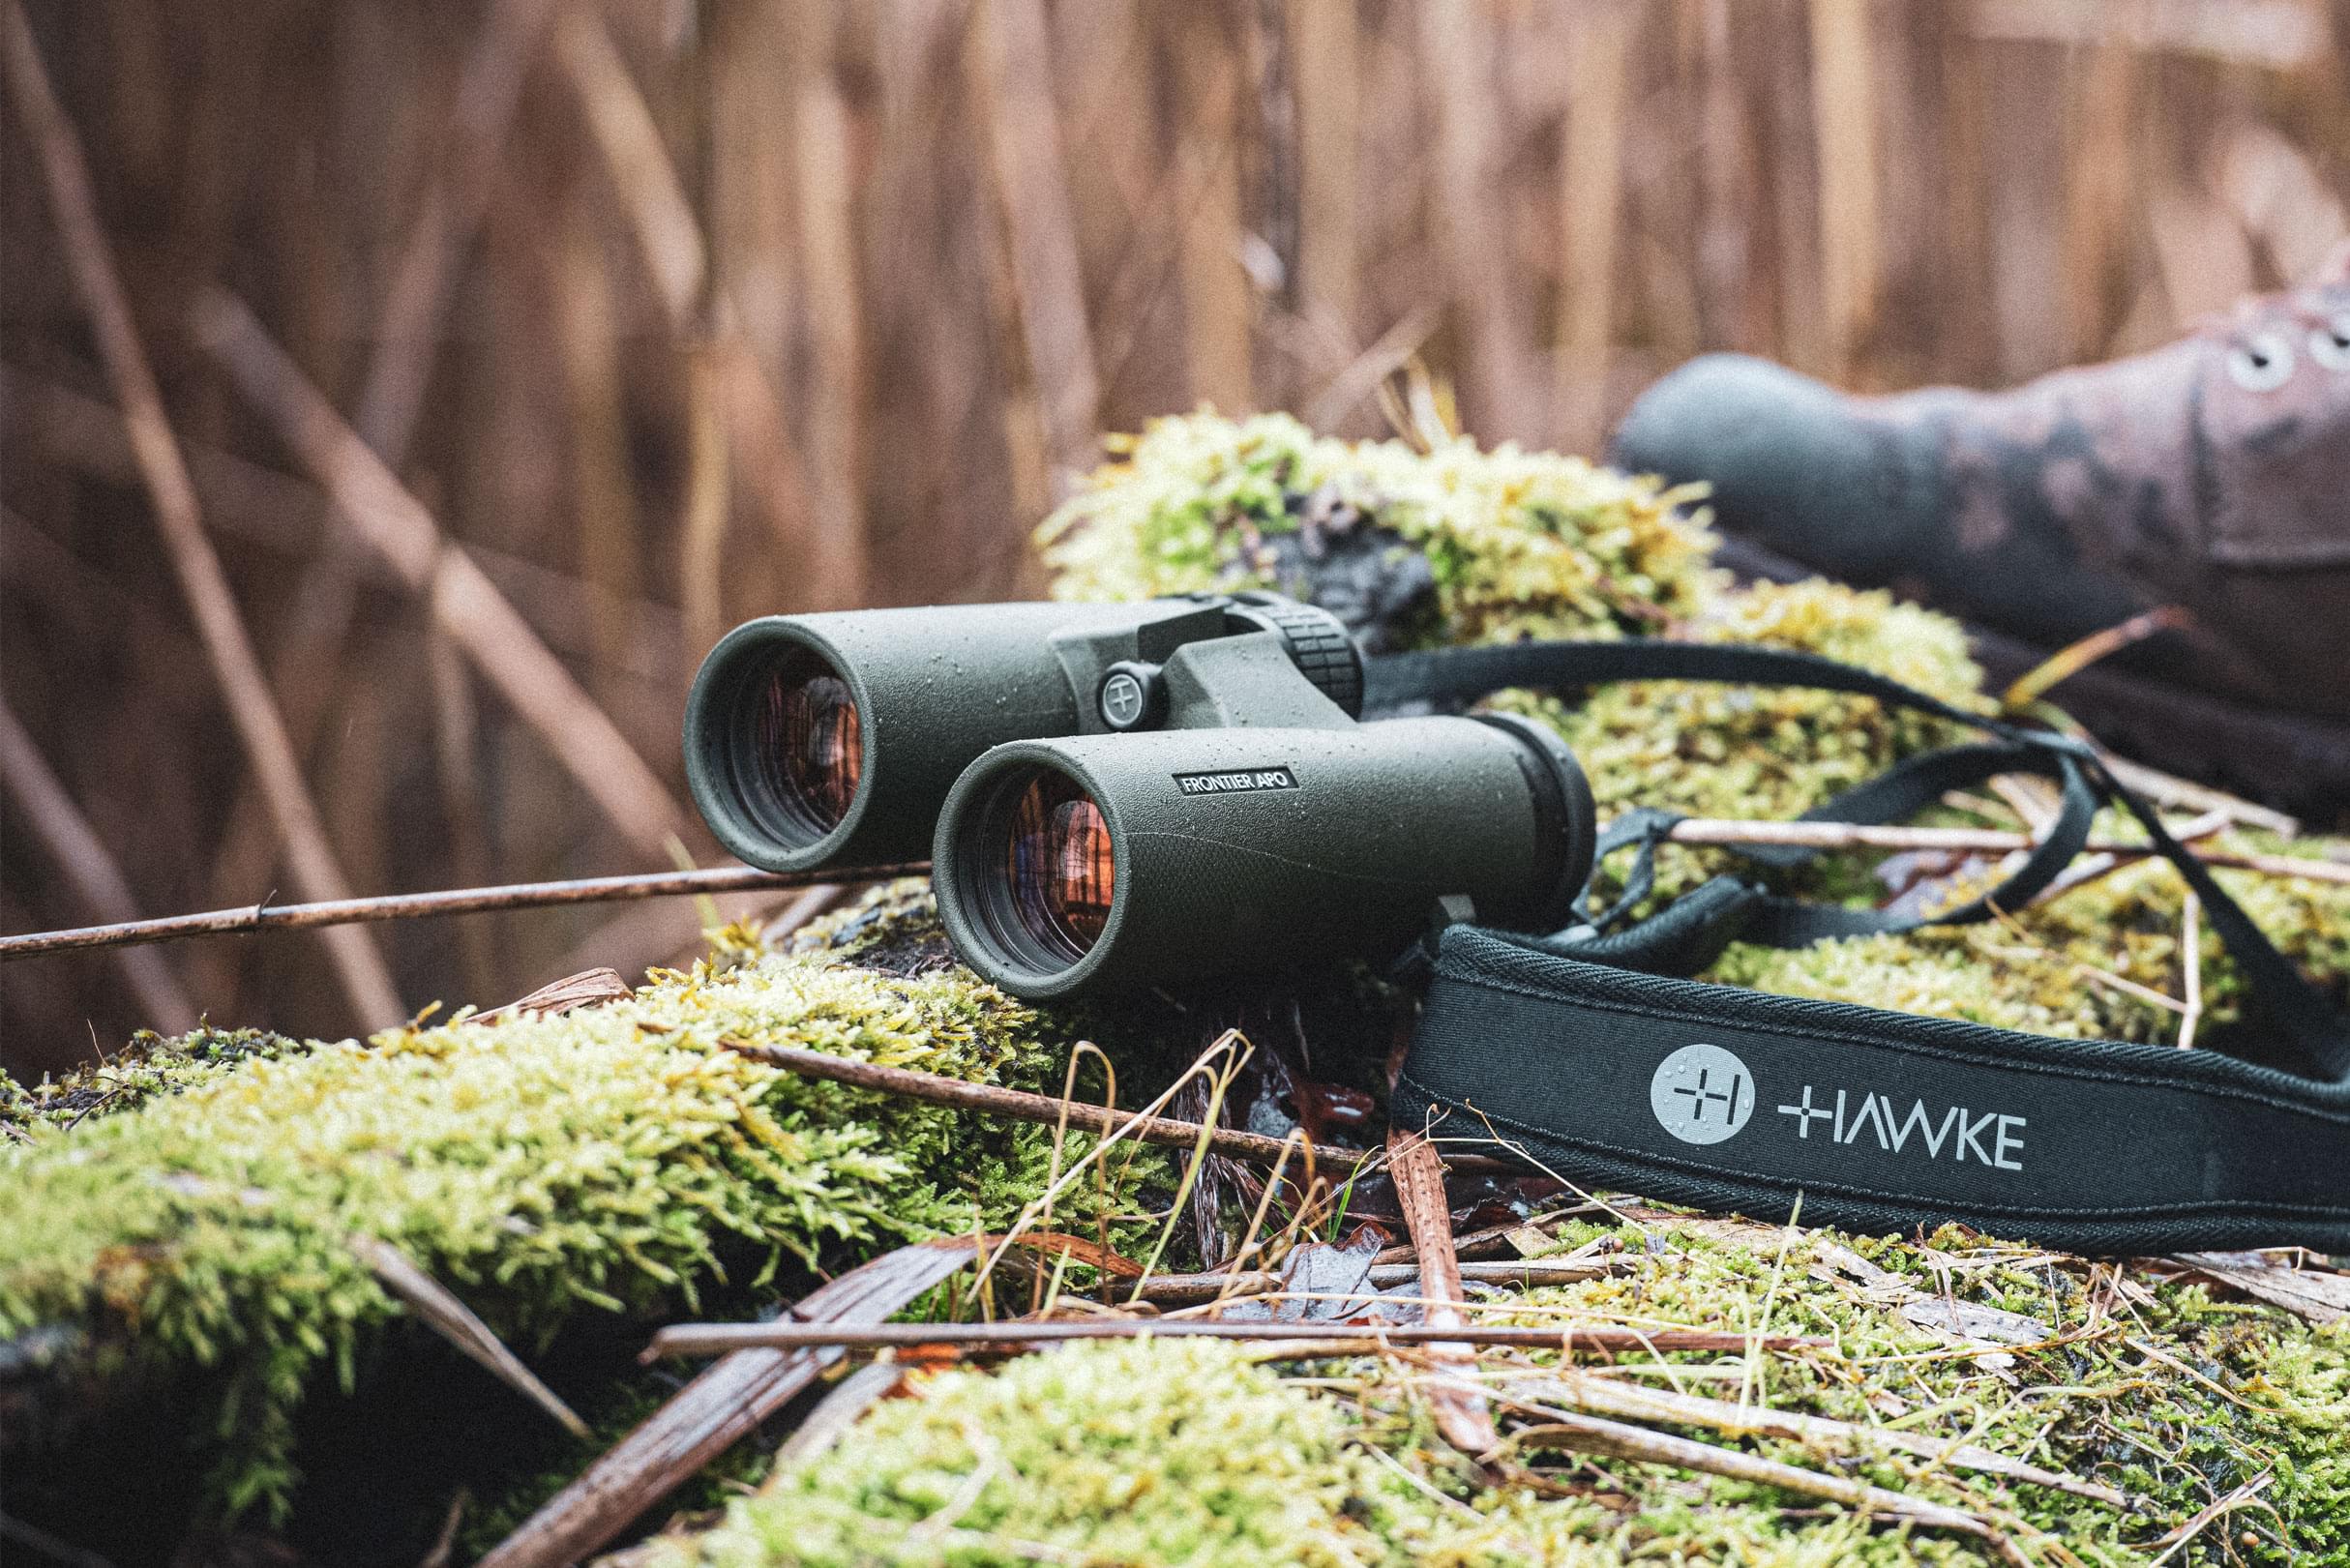 Hawke binoculars at carmarthen cameras